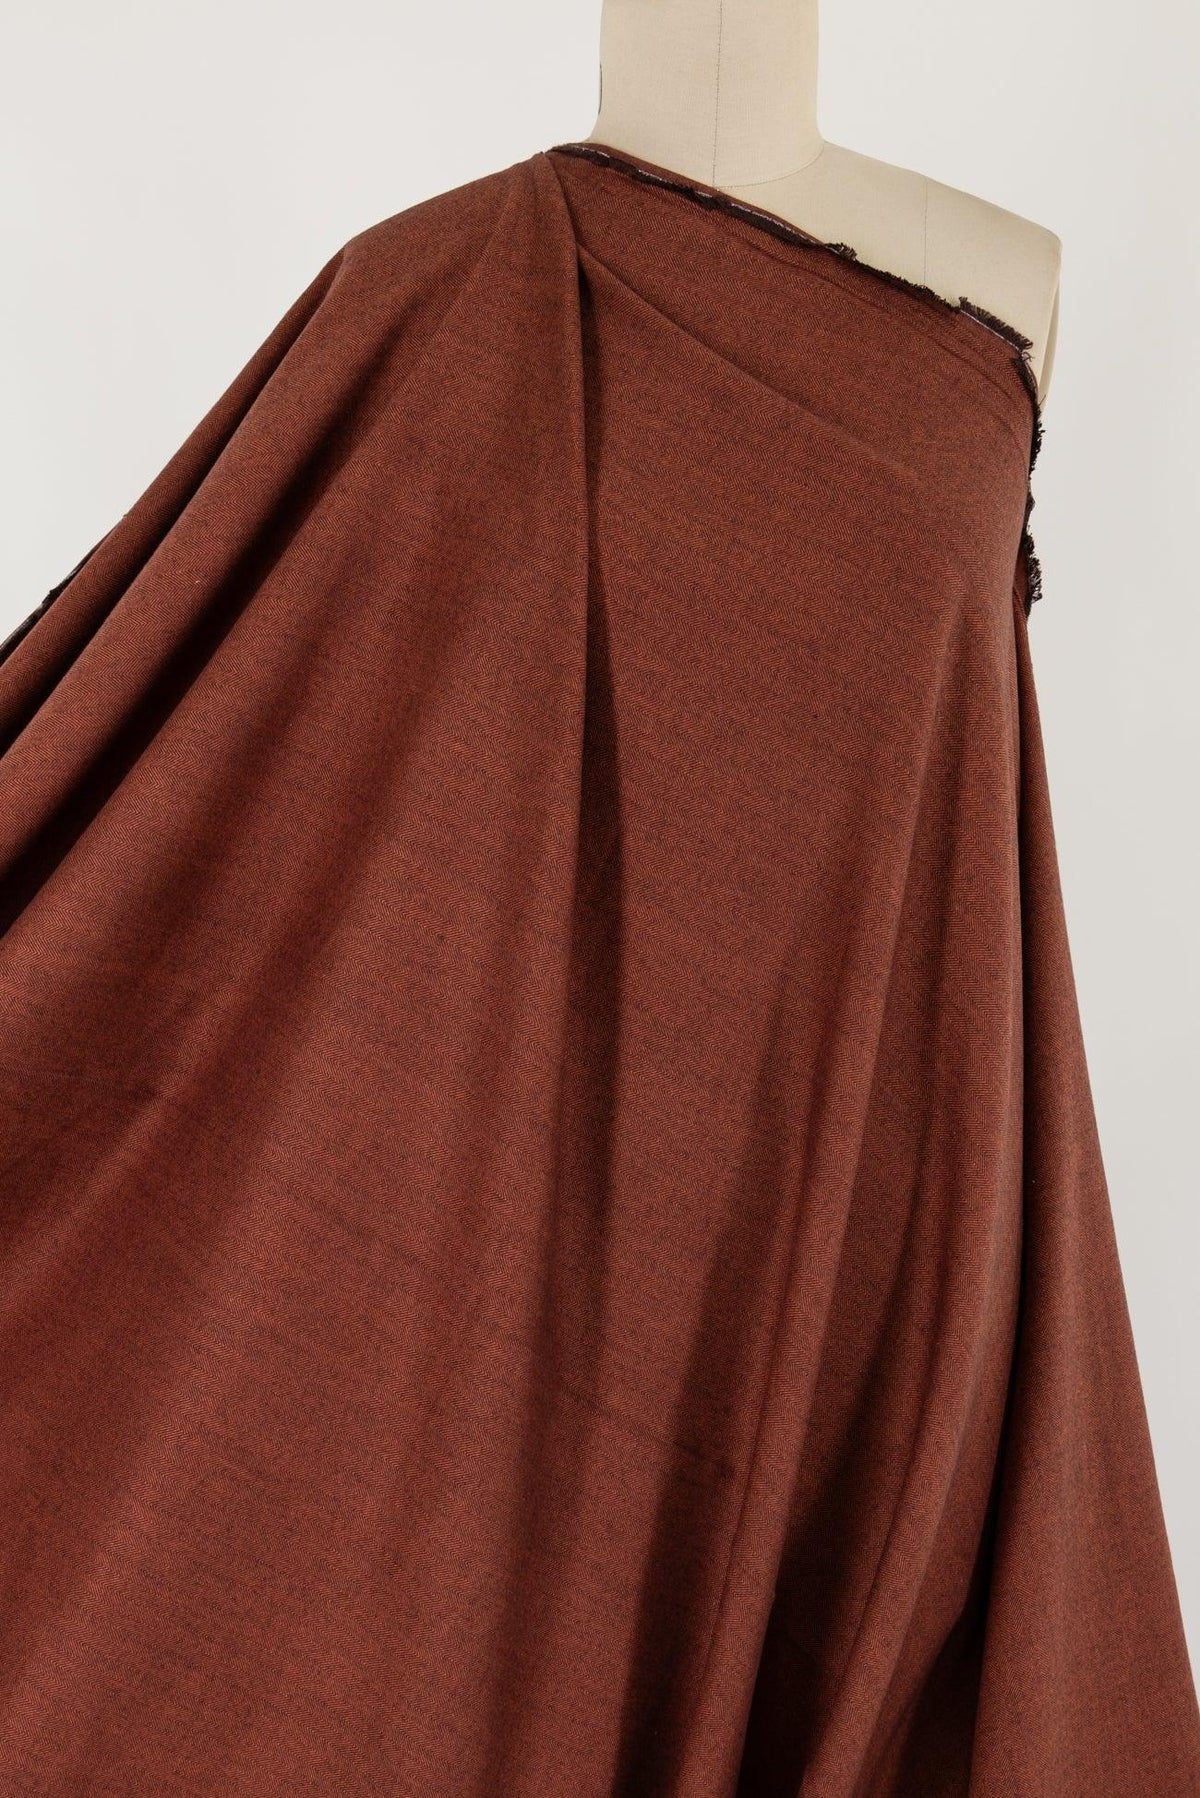 Rust Herringbone Cotton Flannel Woven - Marcy Tilton Fabrics